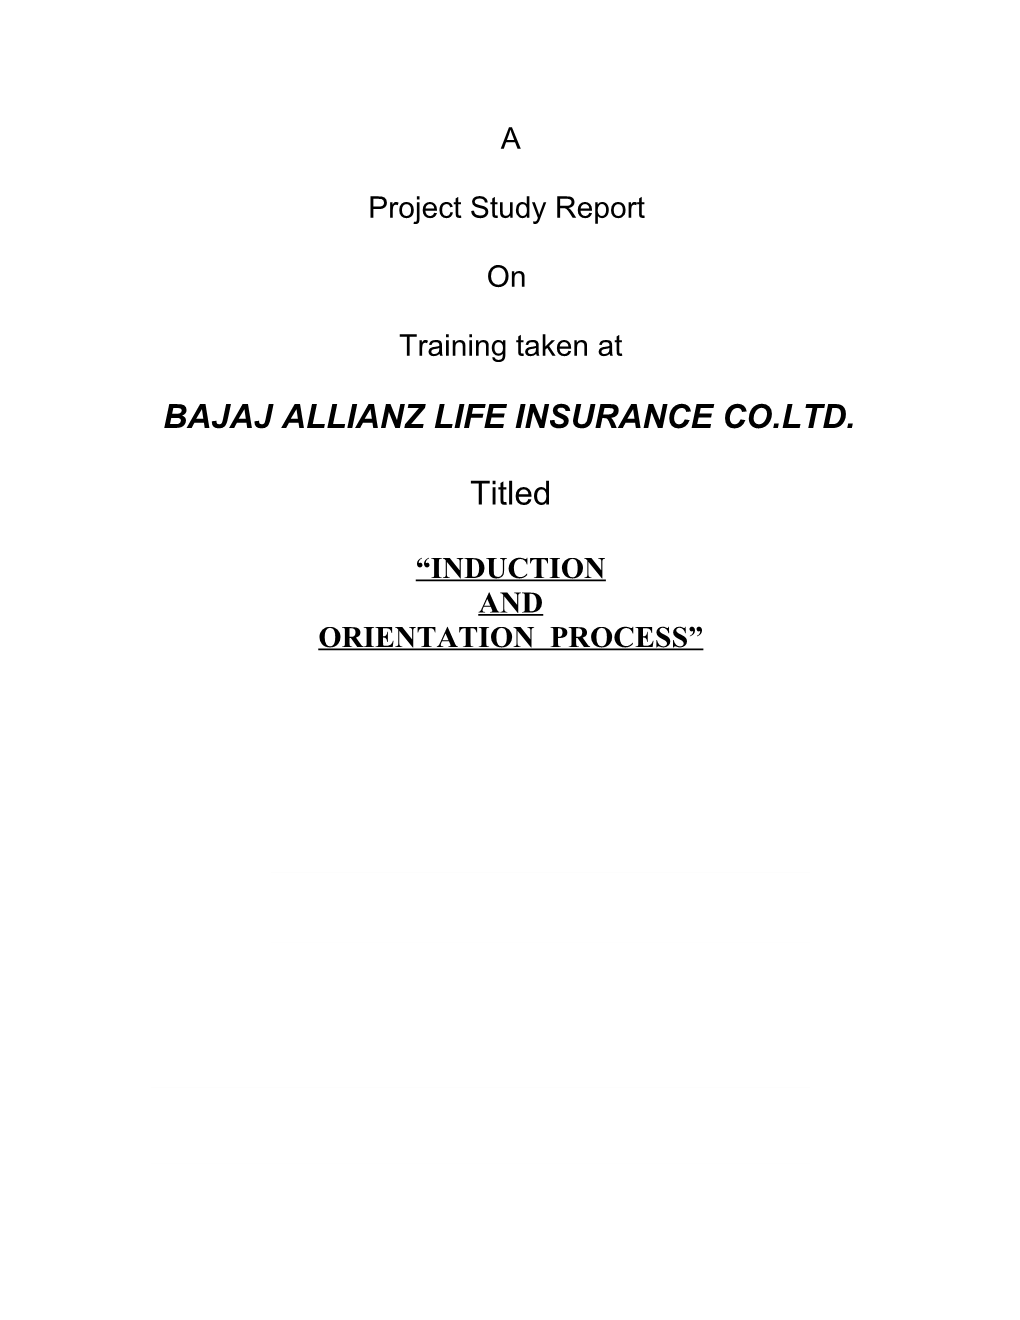 BAJAJ ALLIANZ LIFE INSURANCE CO.LTD. Titled